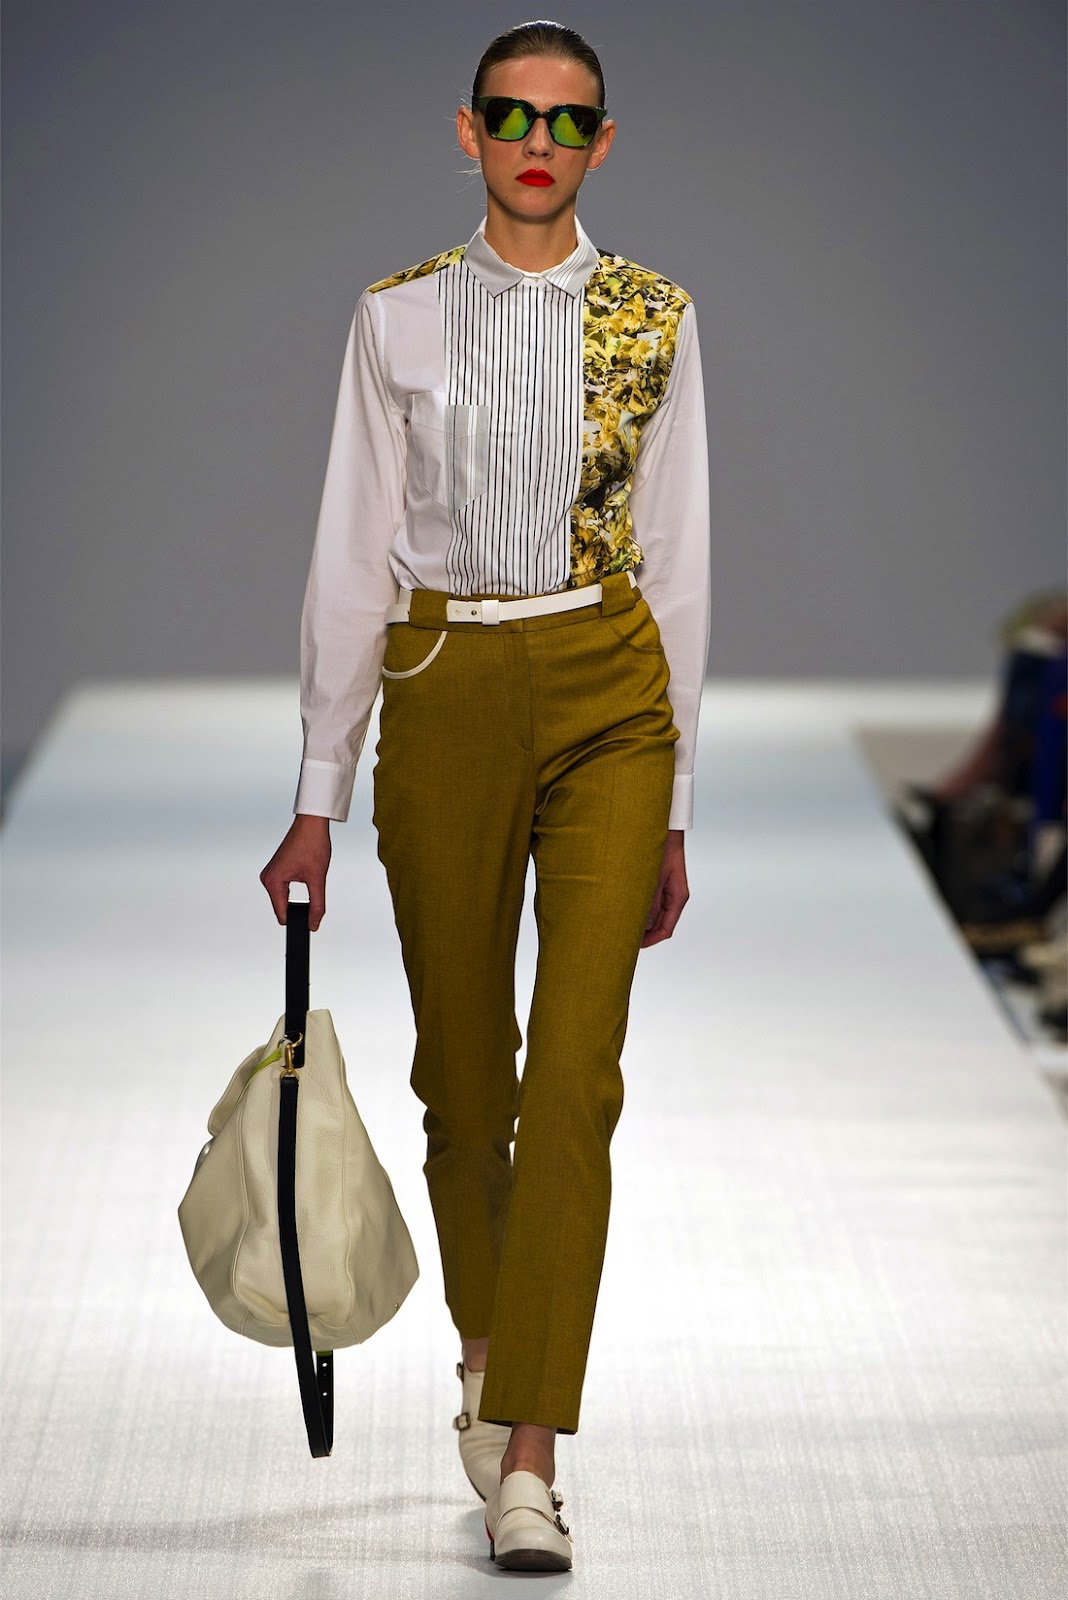 paul smith s/s 13 london | visual optimism; fashion editorials, shows ...